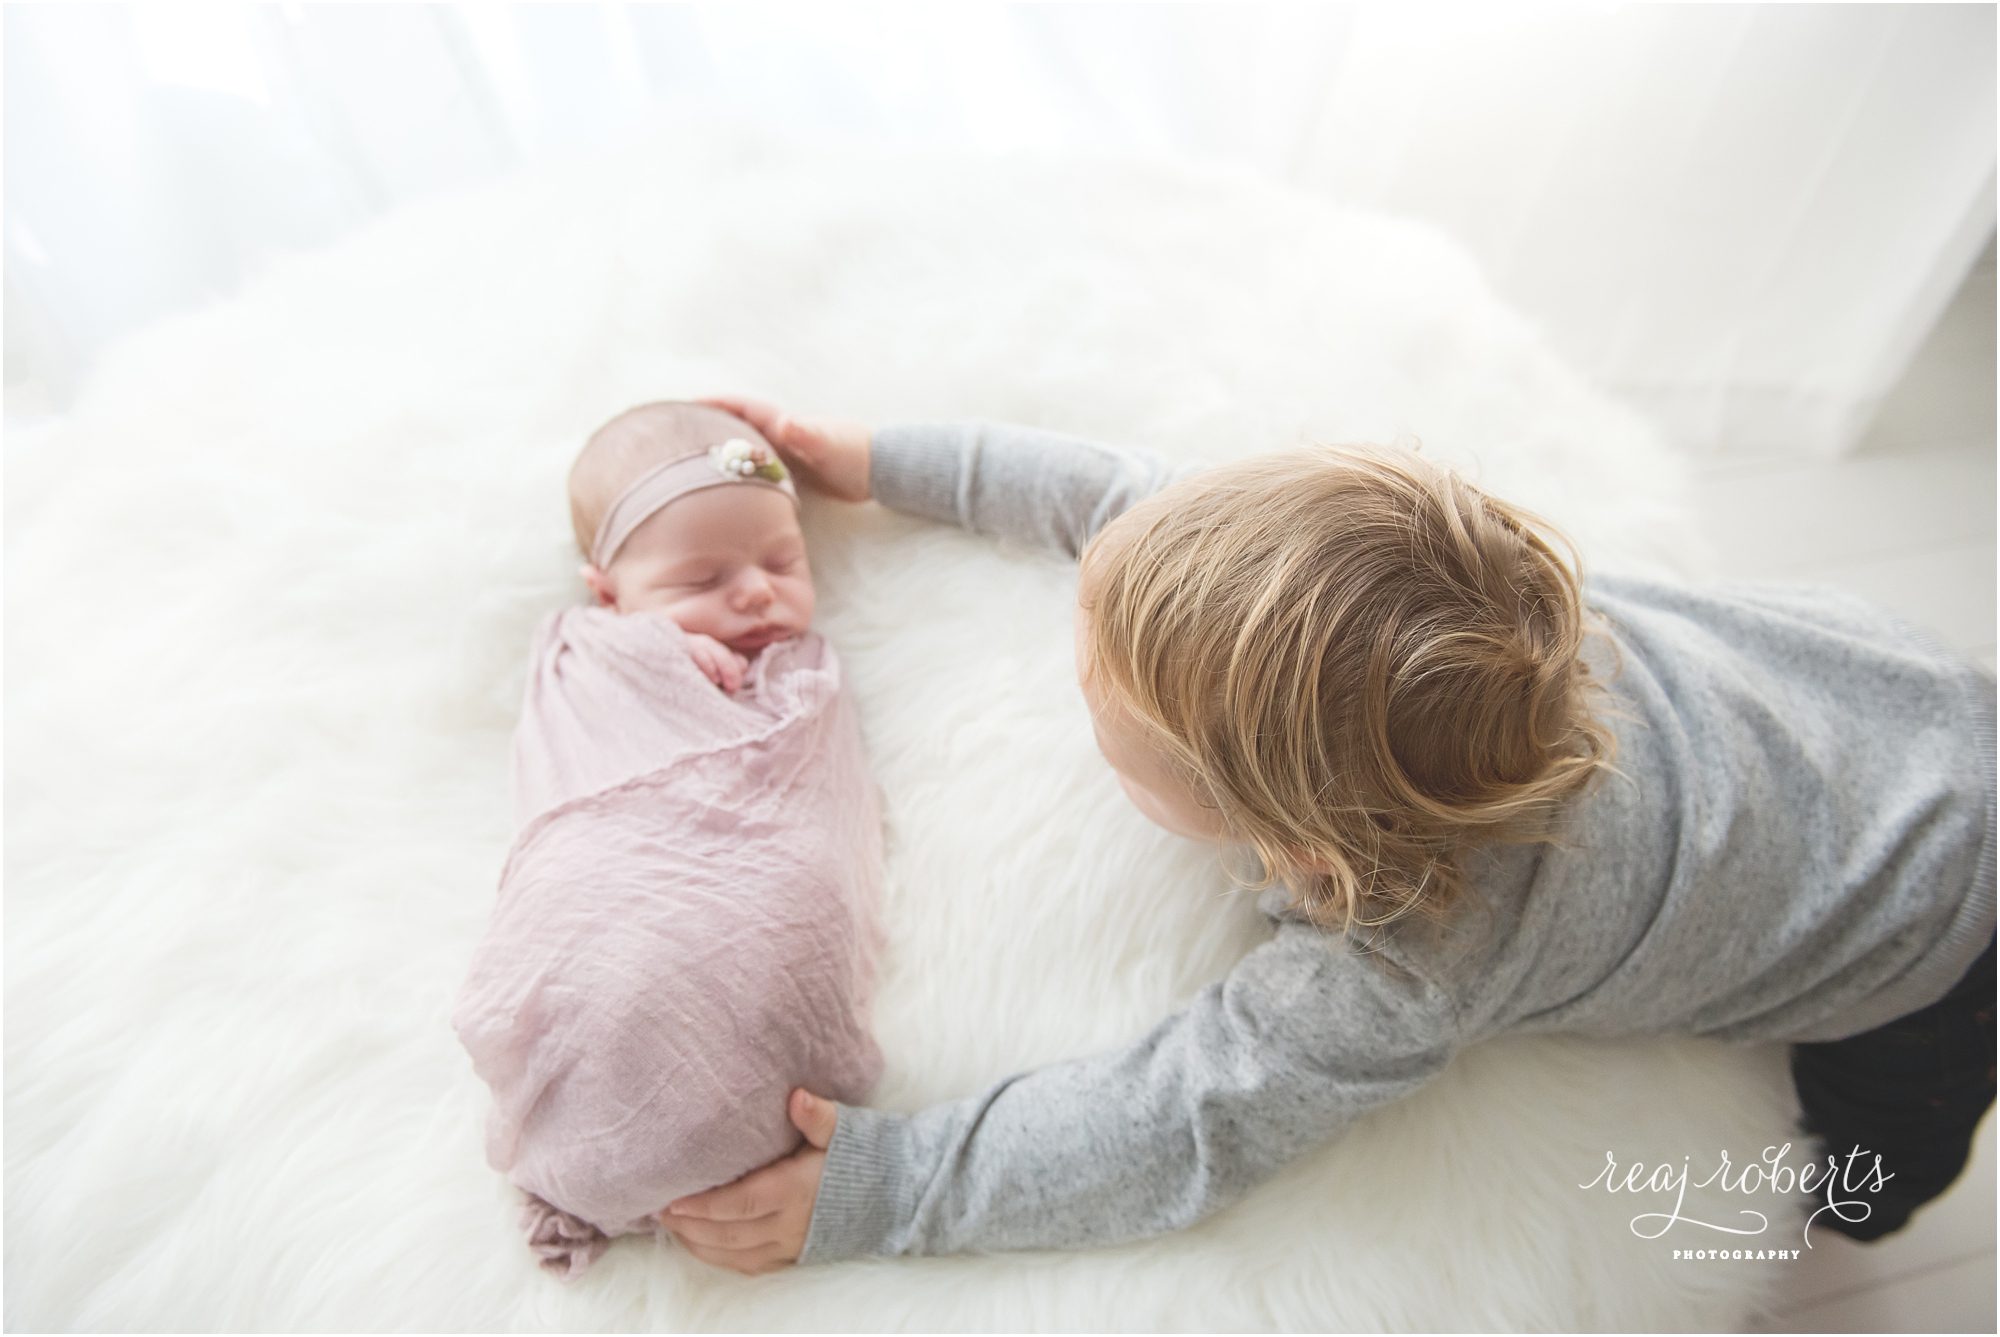 Newborn Photos with Sibling | © Reaj Roberts Photography | Chandler, Arizona